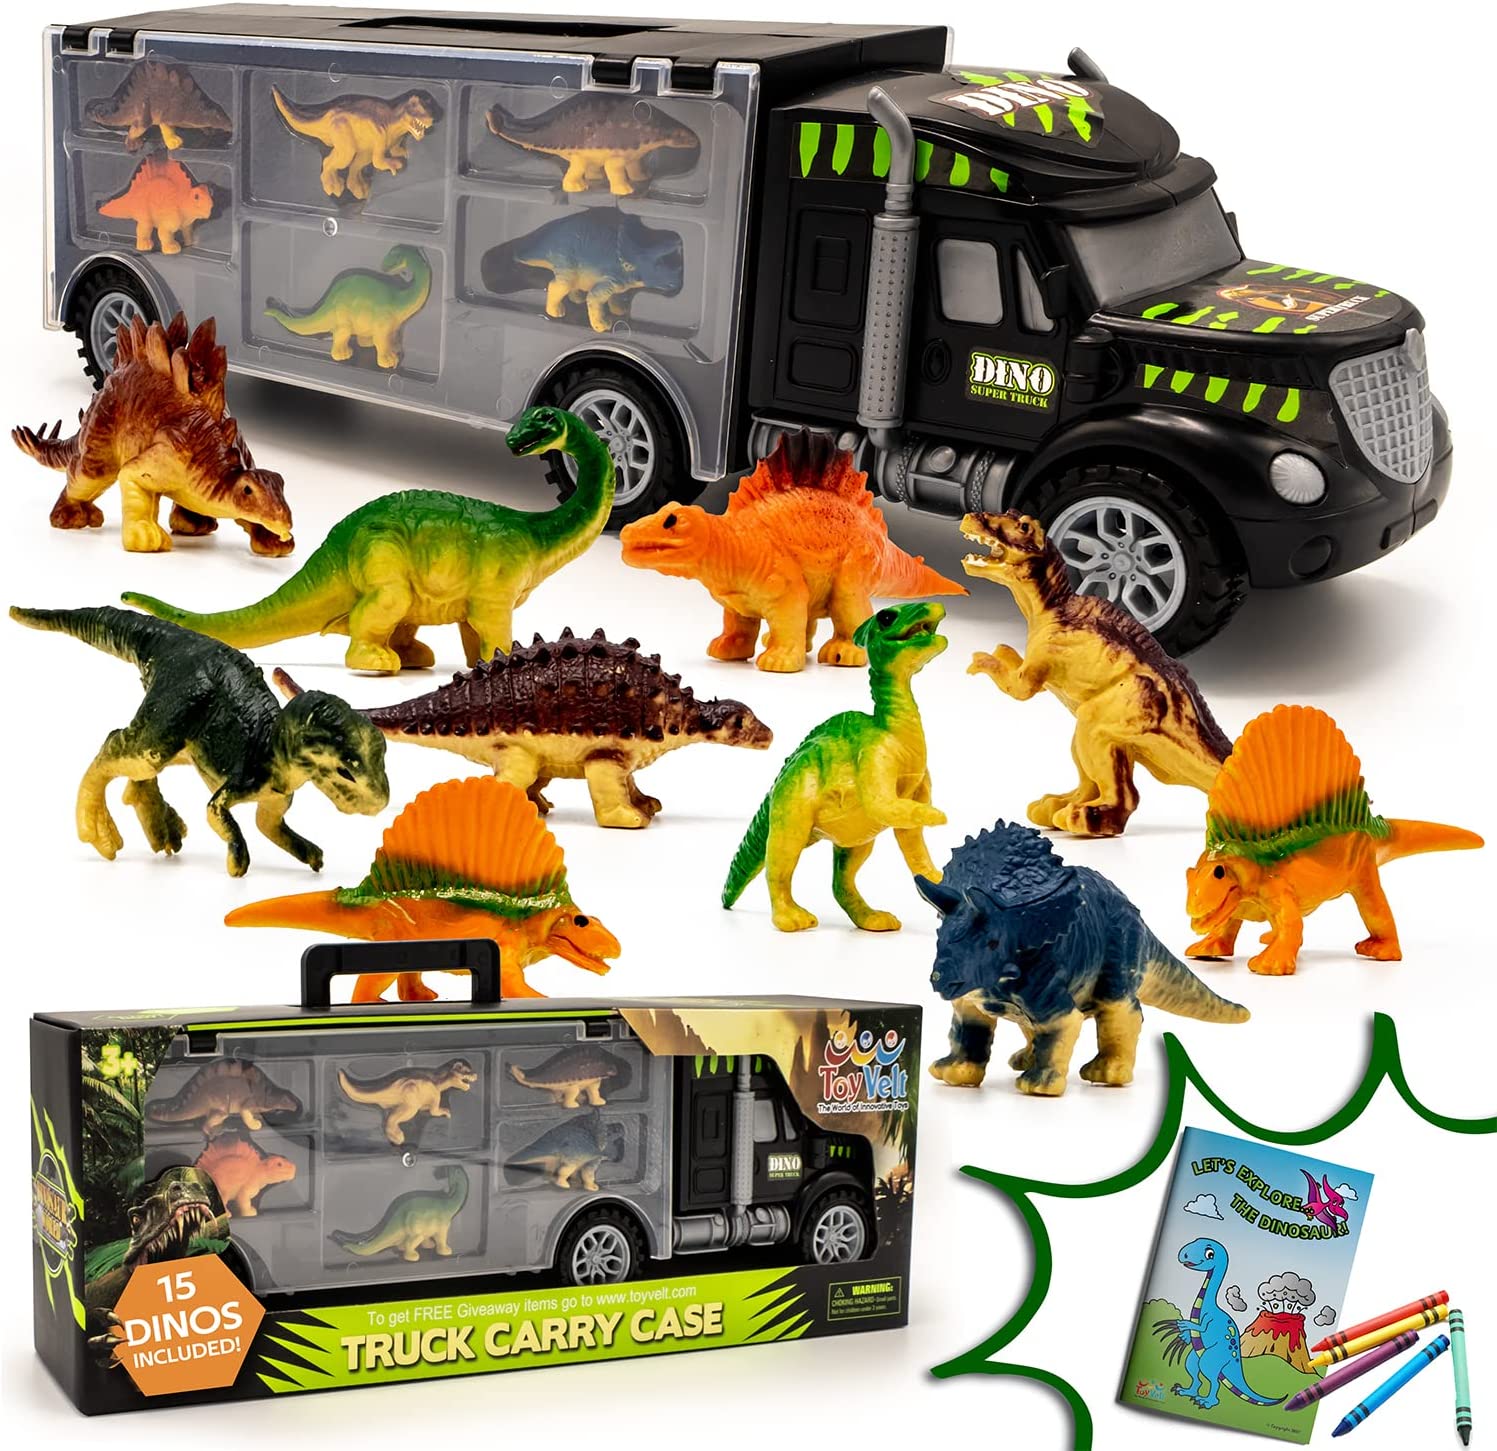 Toyvelt Children’s Transportation Truck & Dinosaur Toys